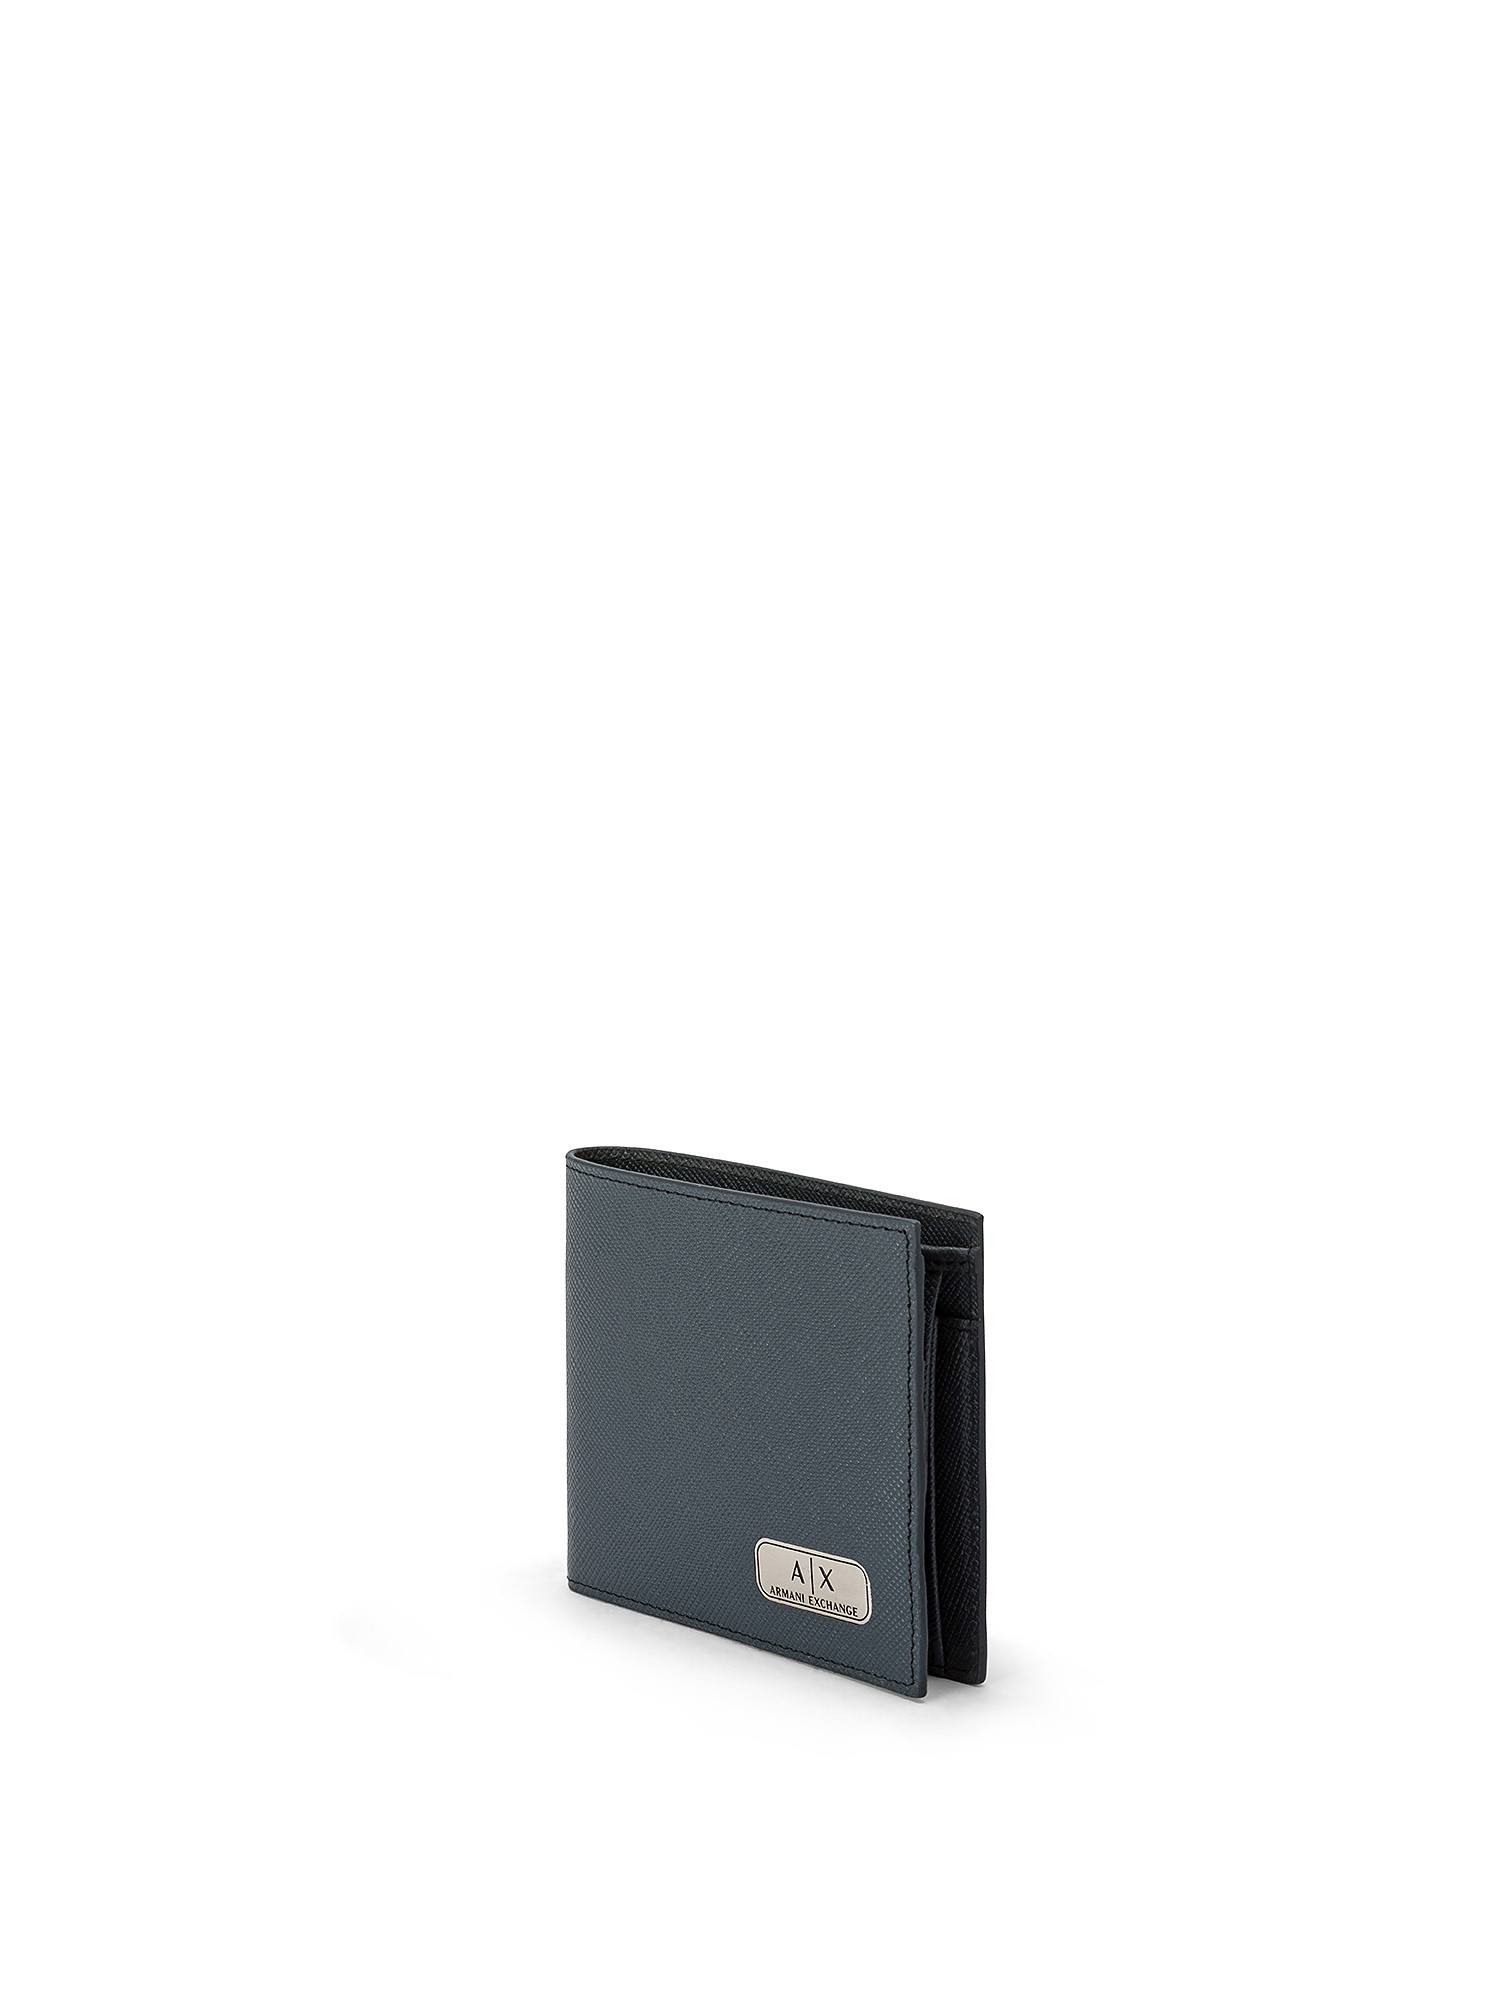 Armani Exchange - Leather wallet, Blue, large image number 1